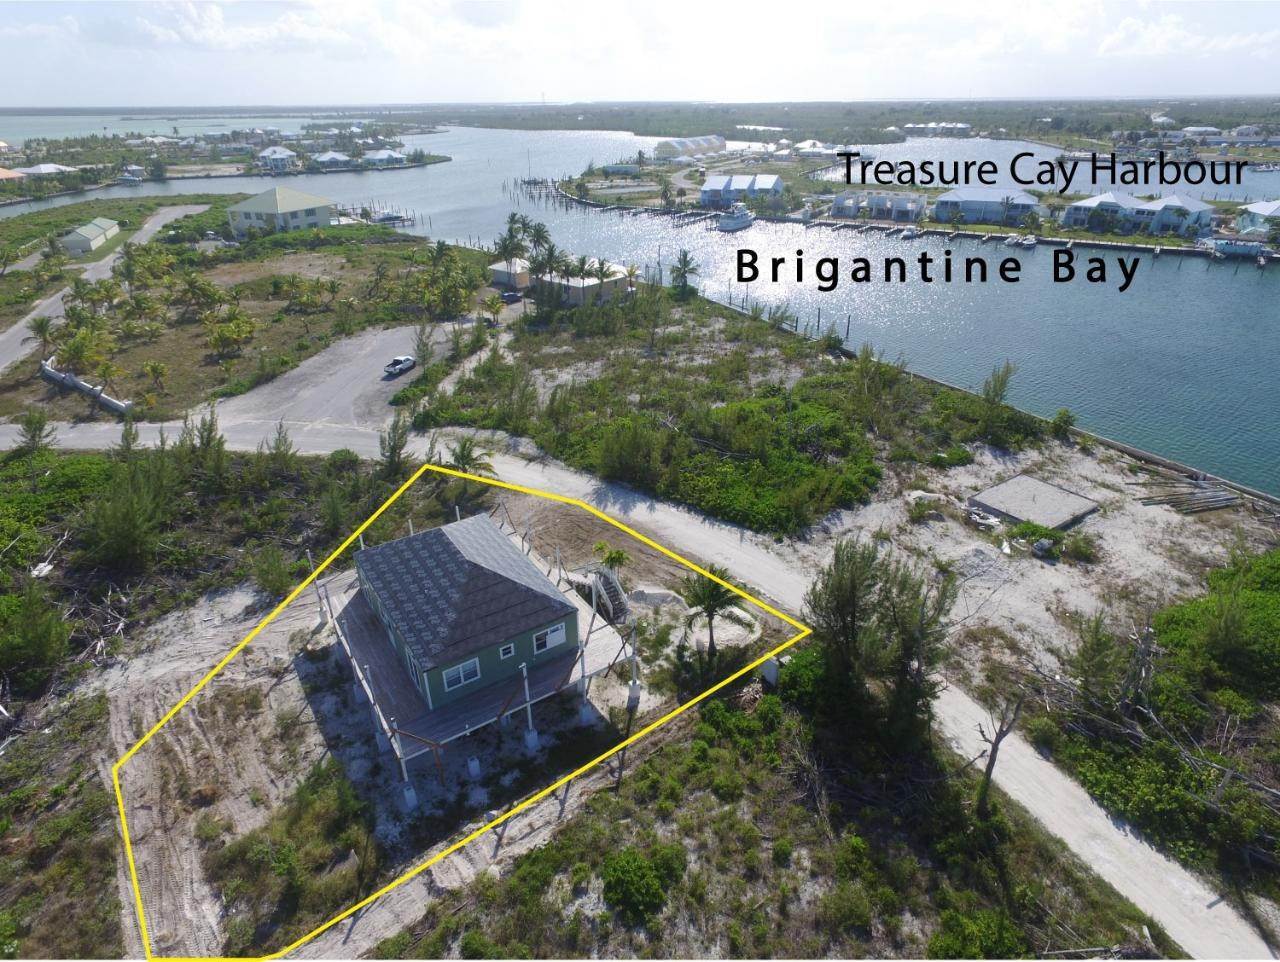 Single Family Homes for Sale at Brigantine Bay, Treasure Cay, Abaco, Bahamas